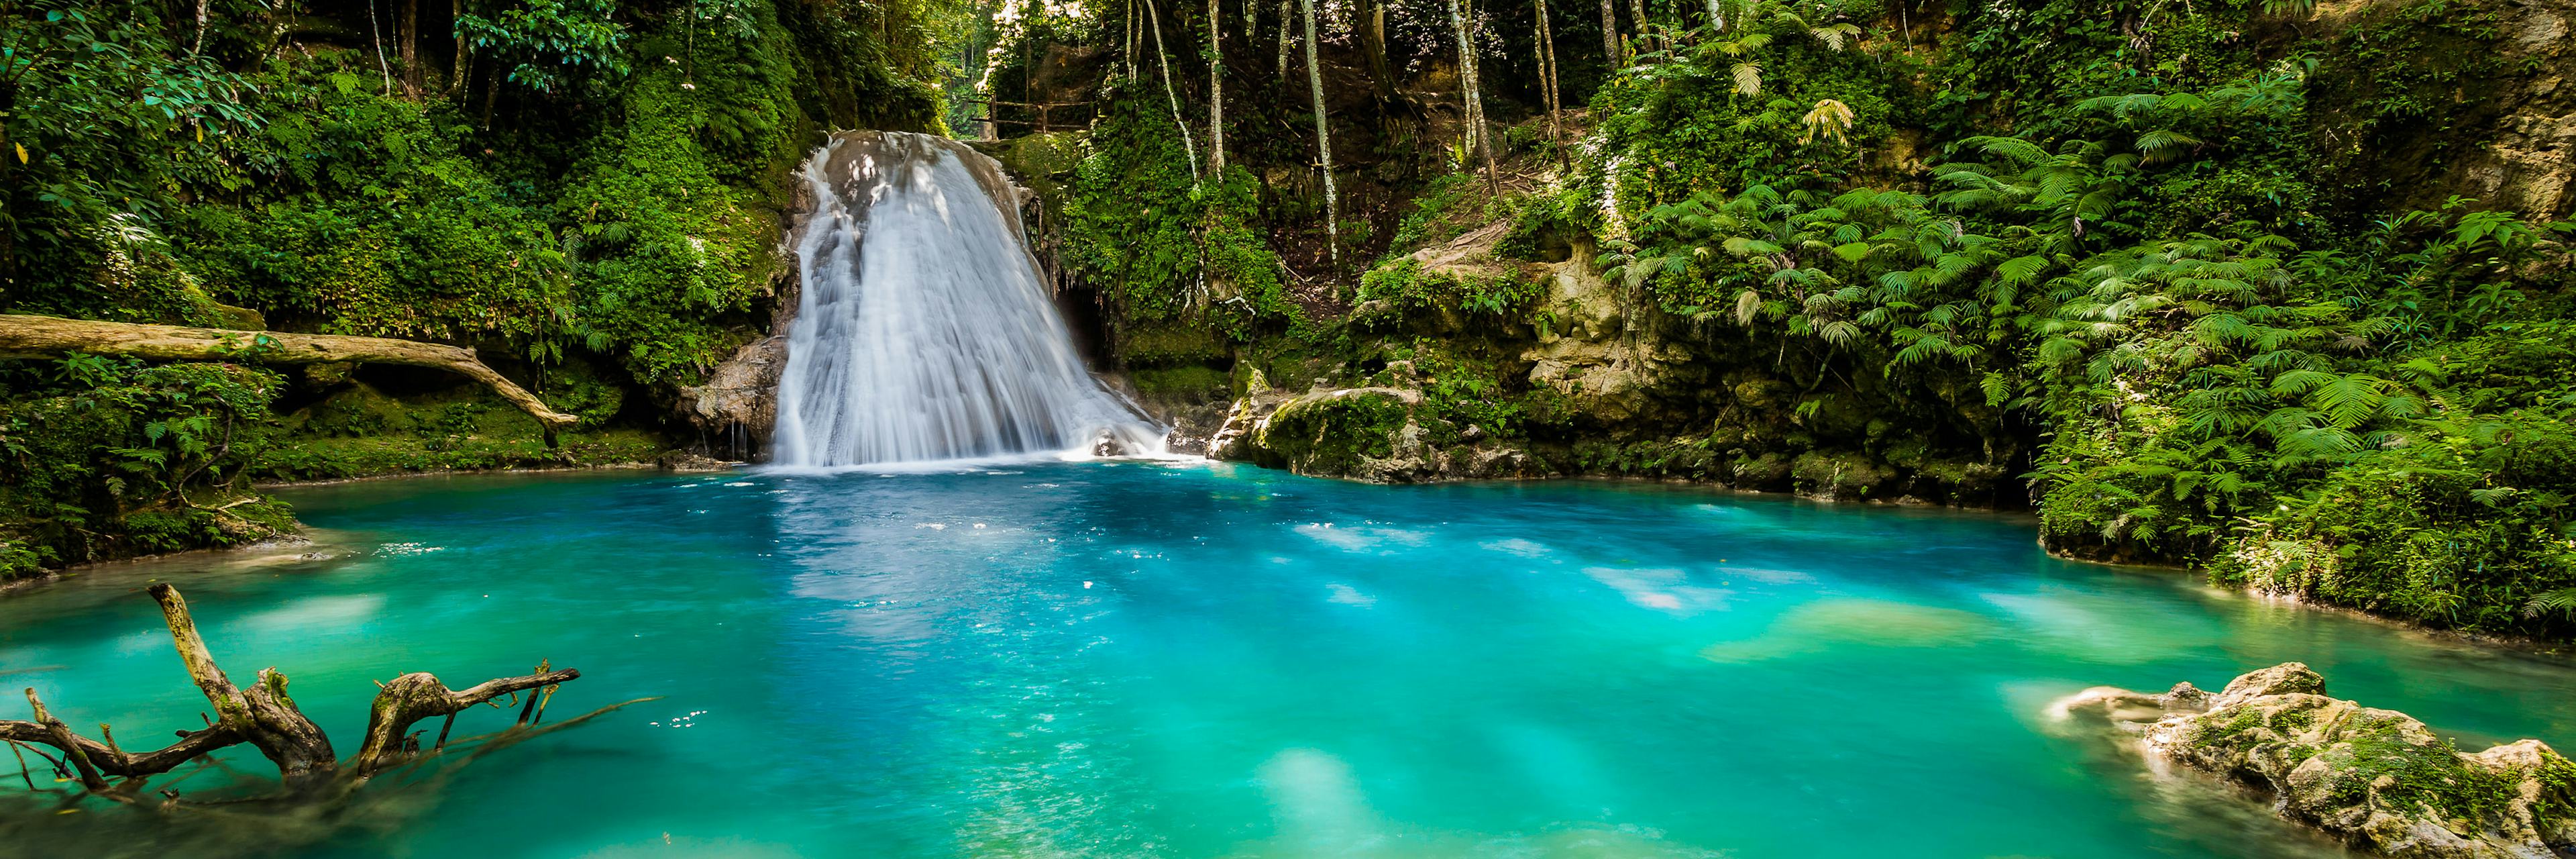 Waterfall in rainforest in Jamaica